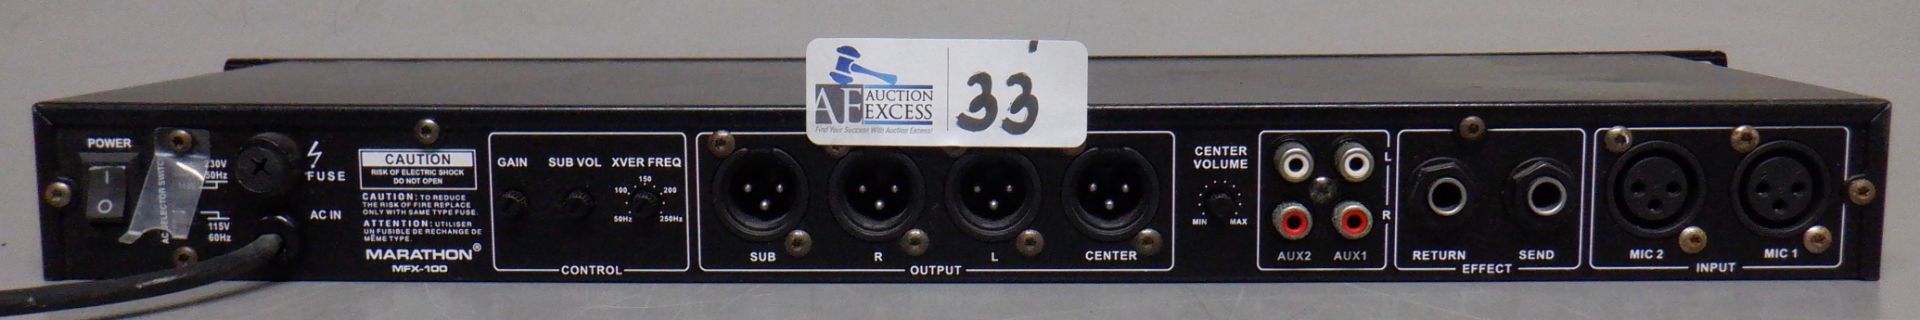 MARATHON MFX-100 PROFESSIONAL DIGITAL EFFECT PROCESSOR - Image 2 of 2